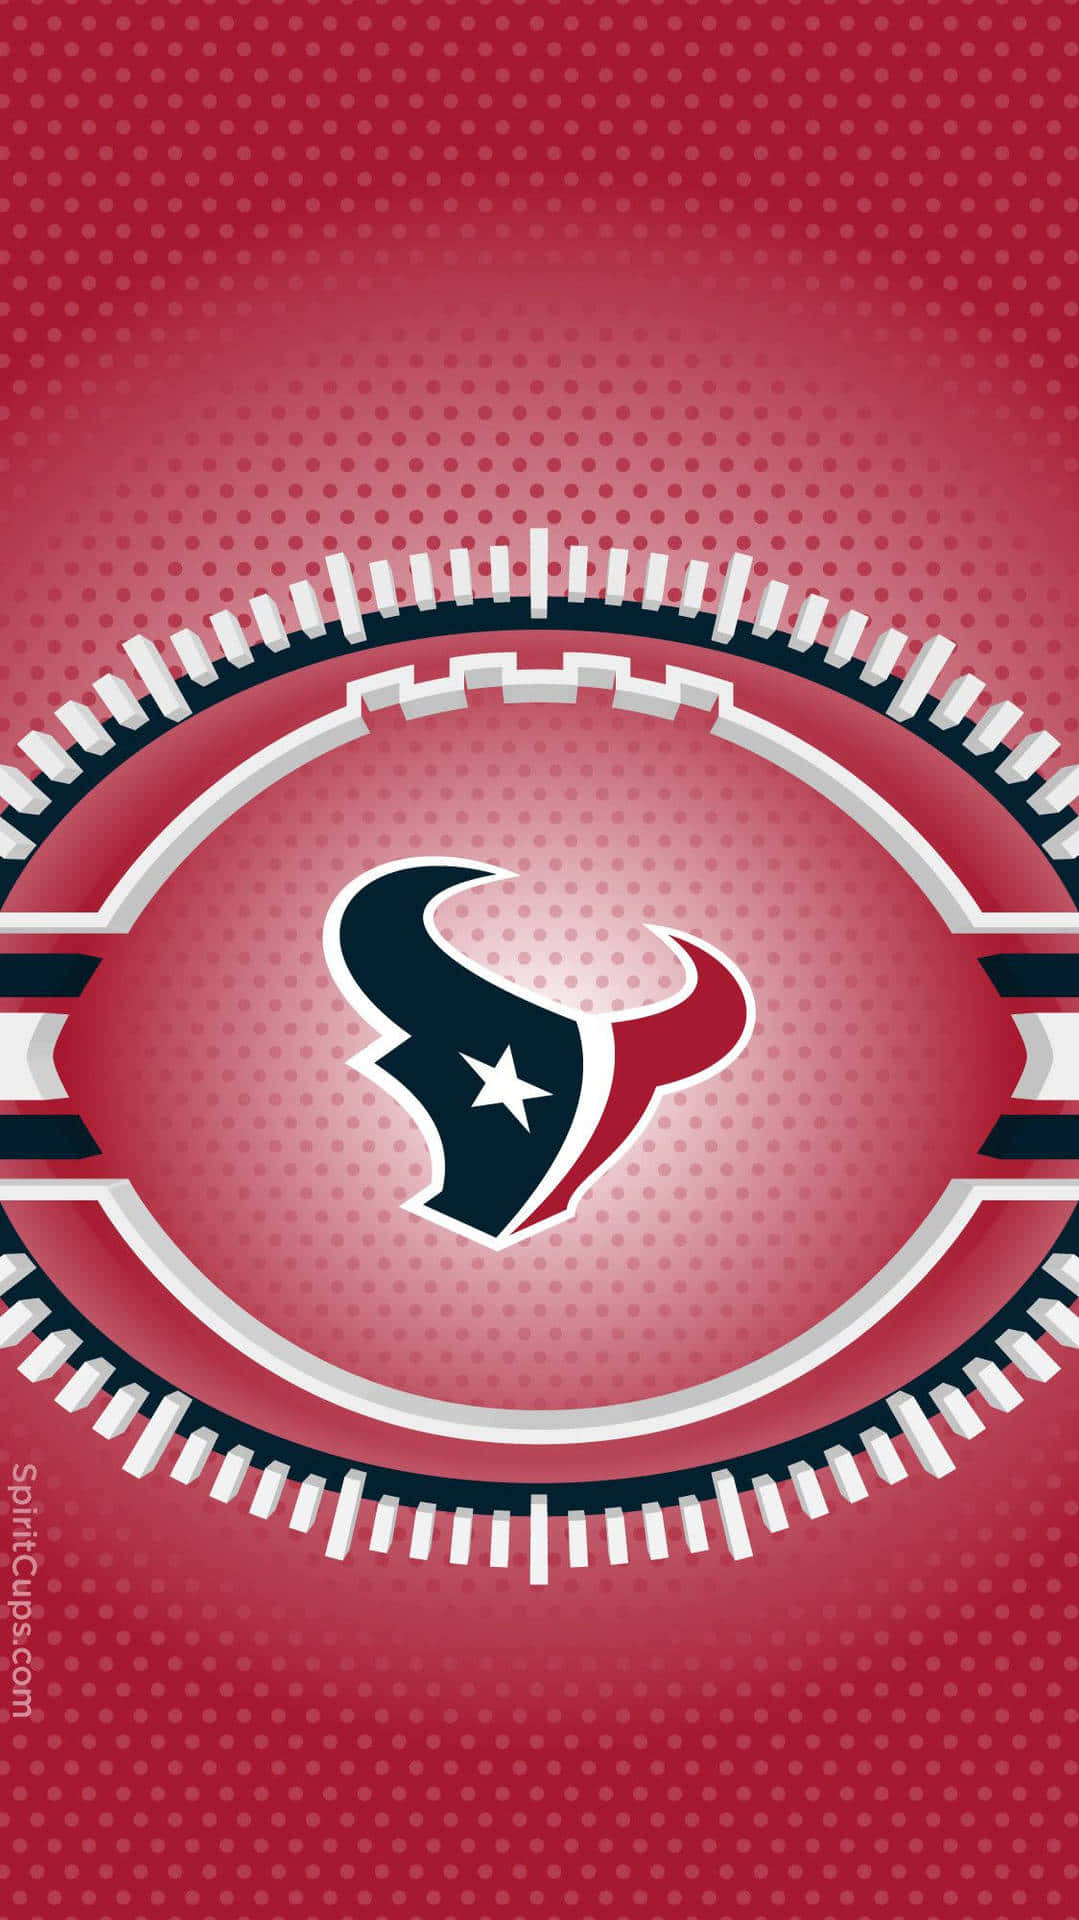 Texans Logo of Houston National Football League Team Wallpaper